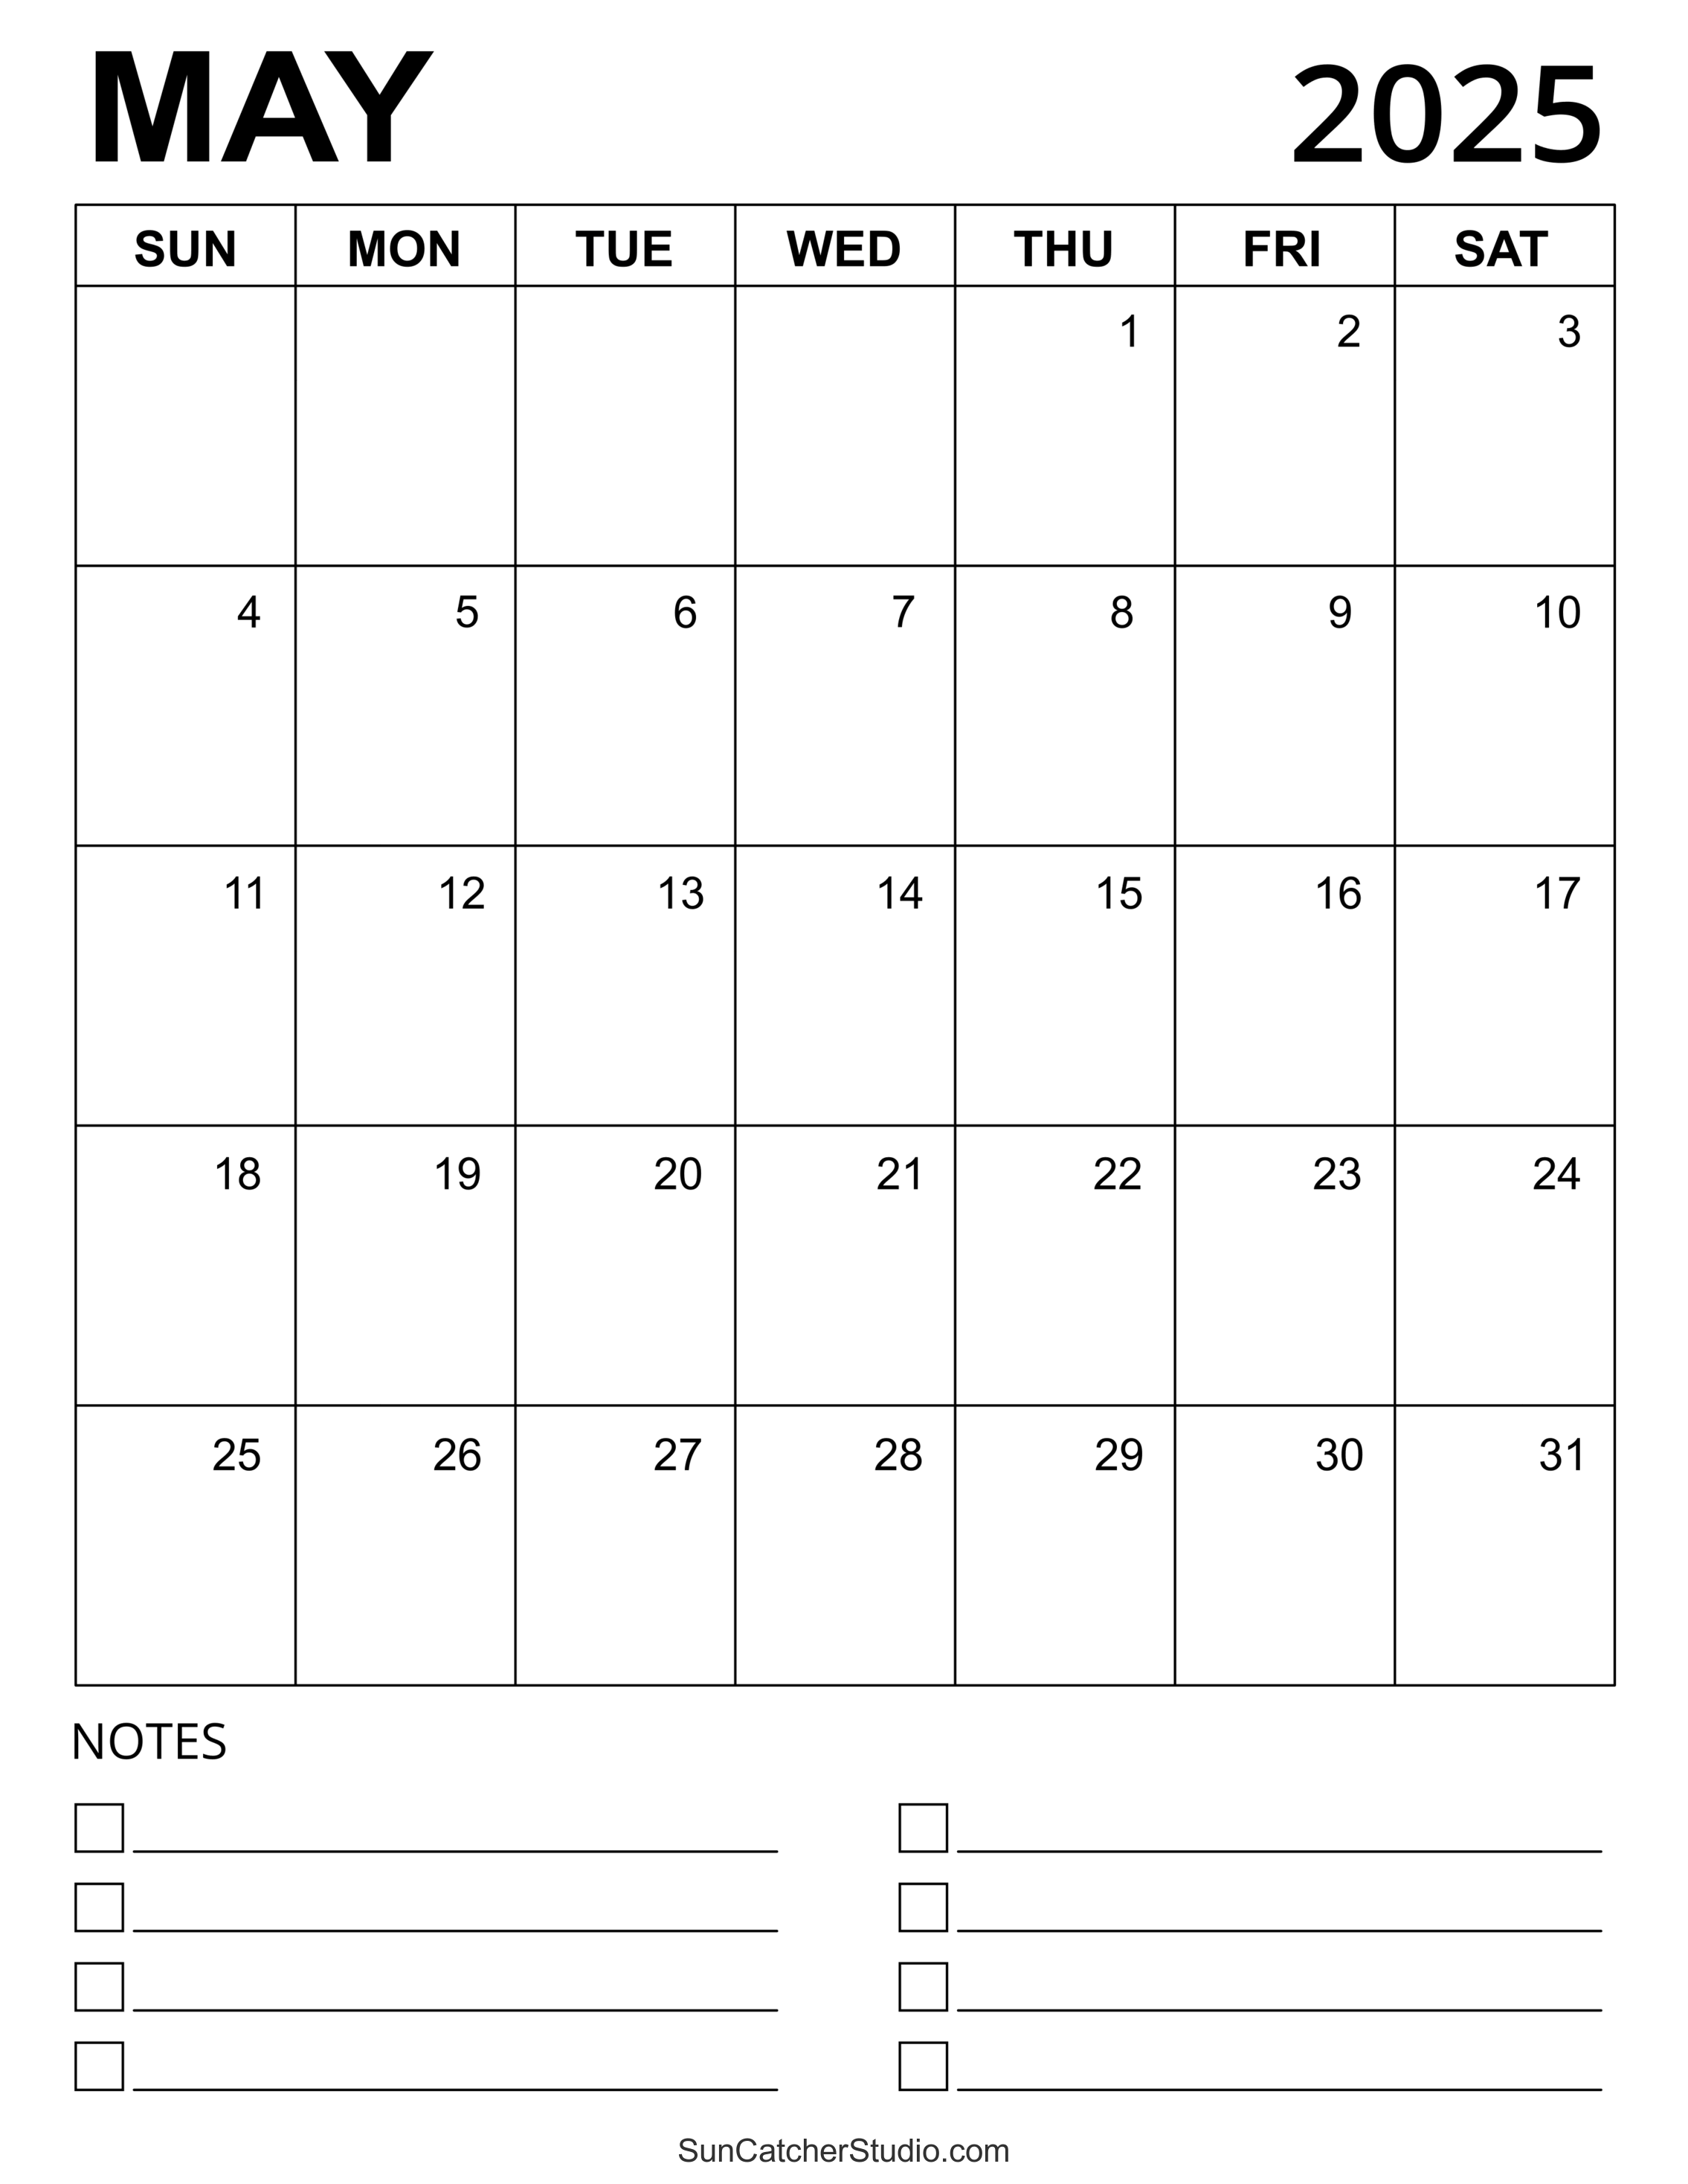 May 2025 Calendar (Free Printable) DIY Projects, Patterns, Monograms